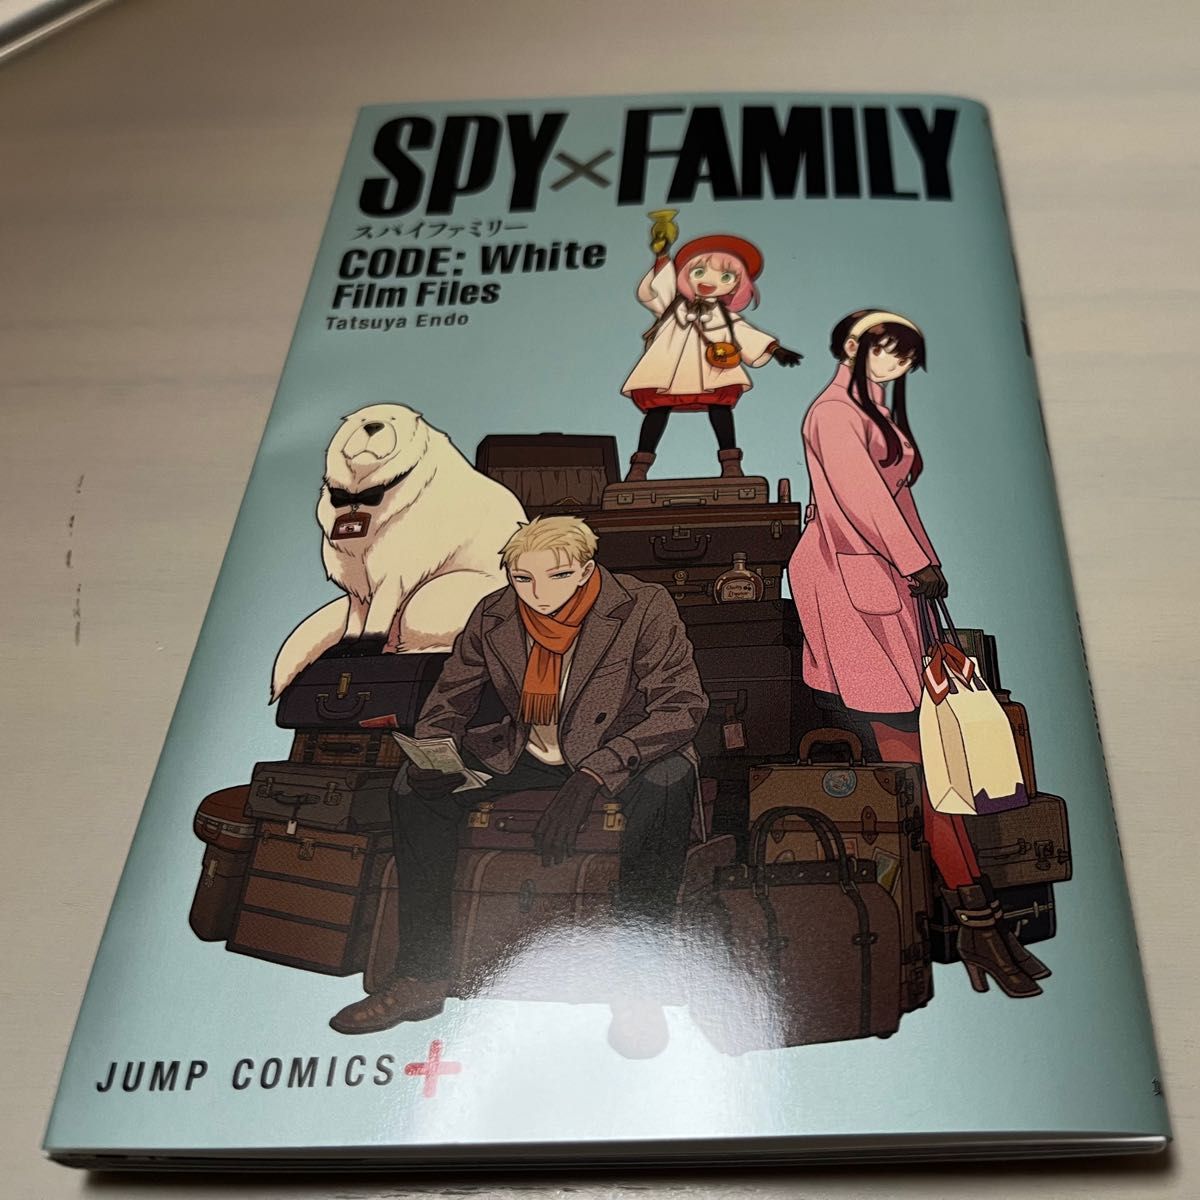 SPY FAMILY 劇場版 CODE White 小冊子 チケット1